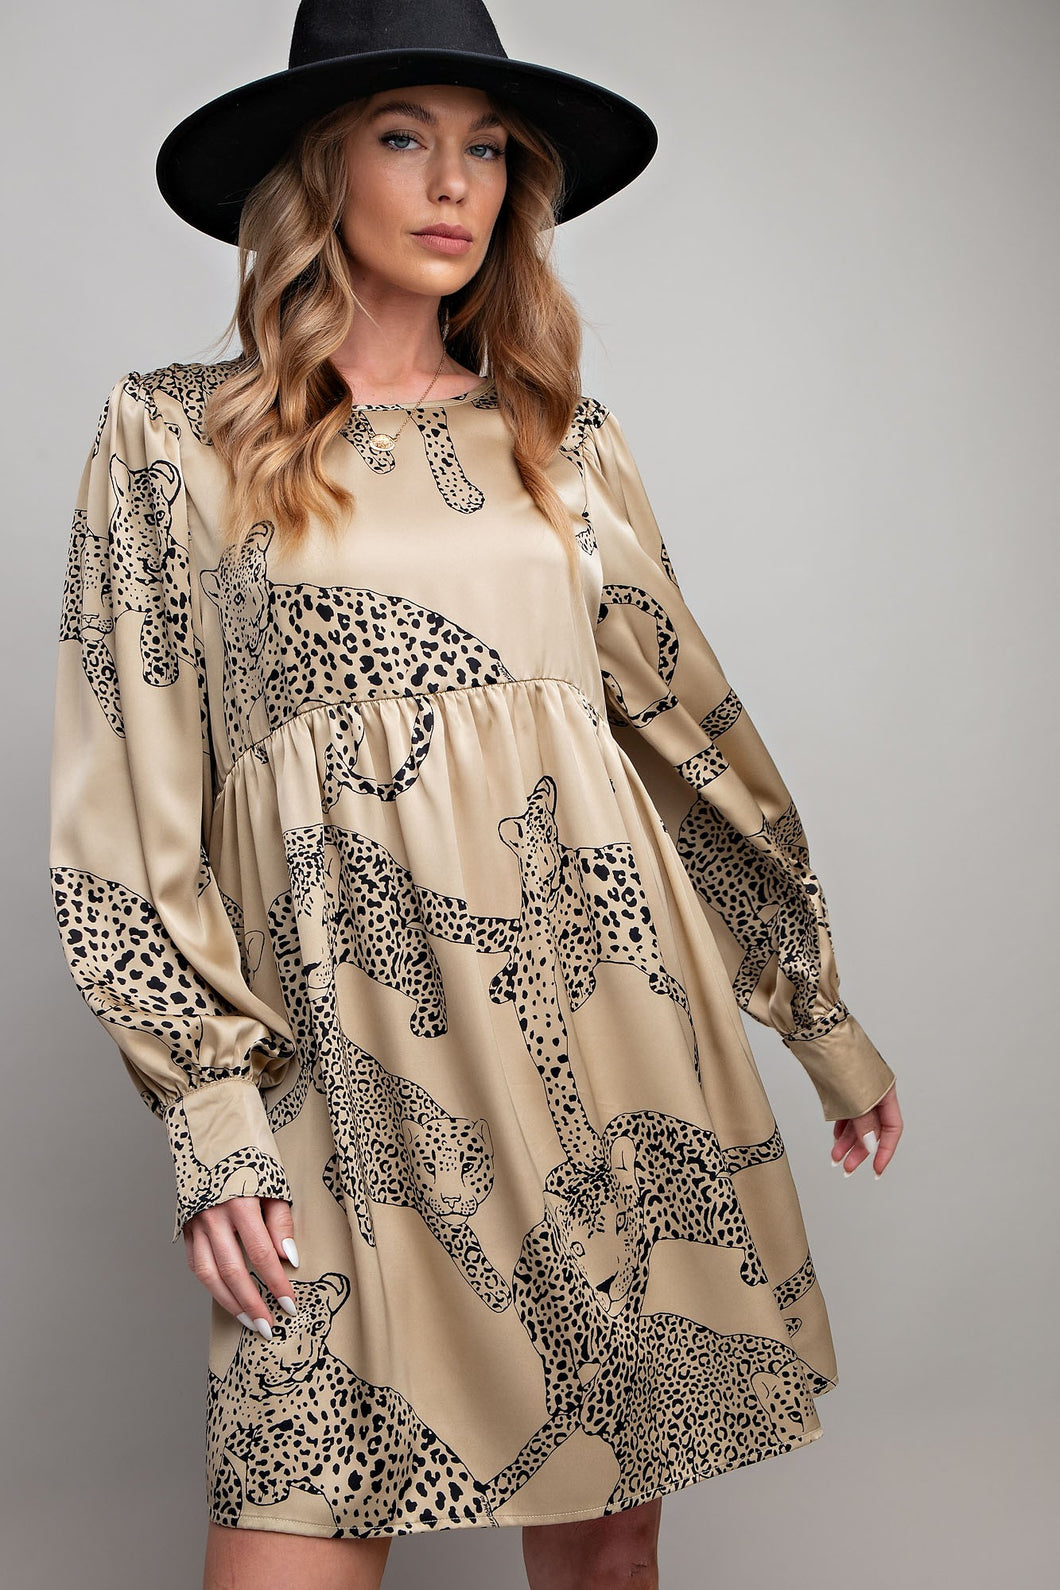 Remi Cheetah Print Dress